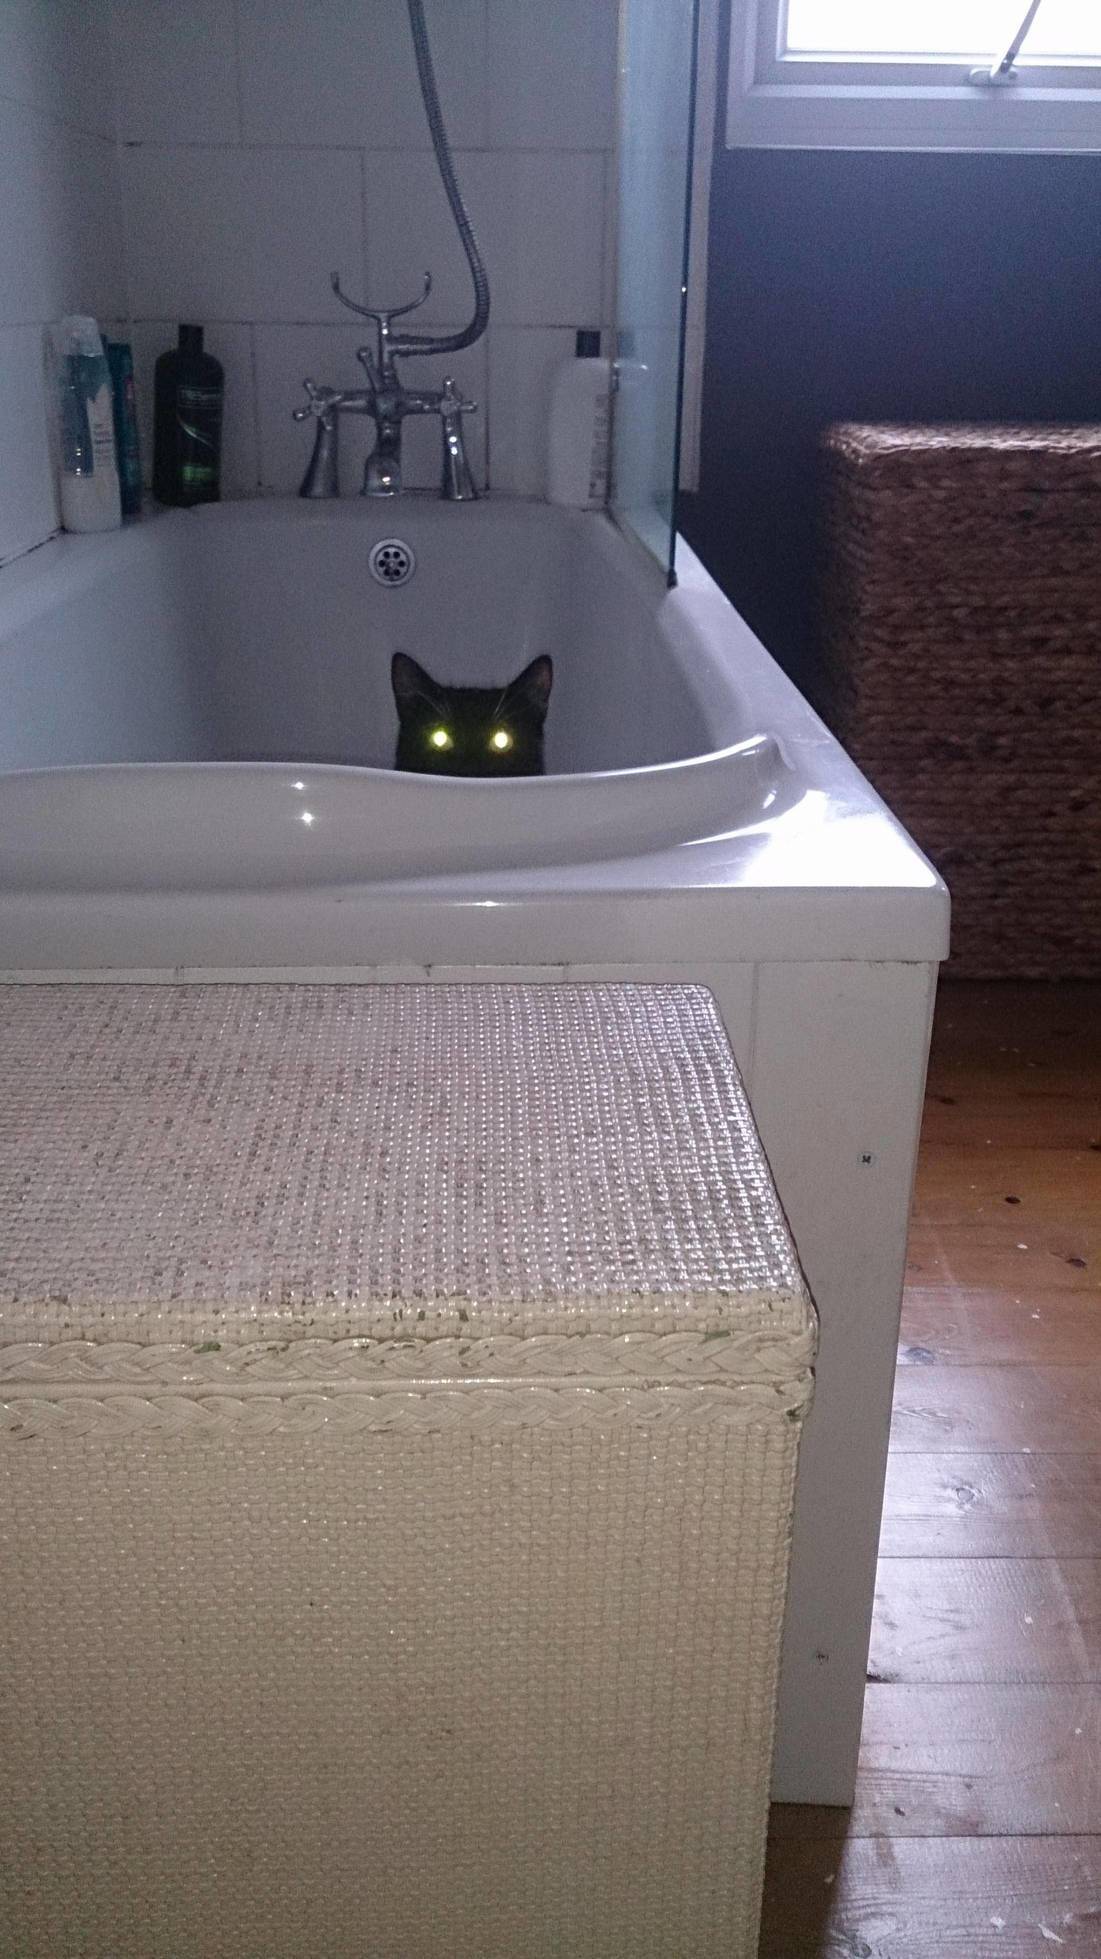 Bath cat of doom.